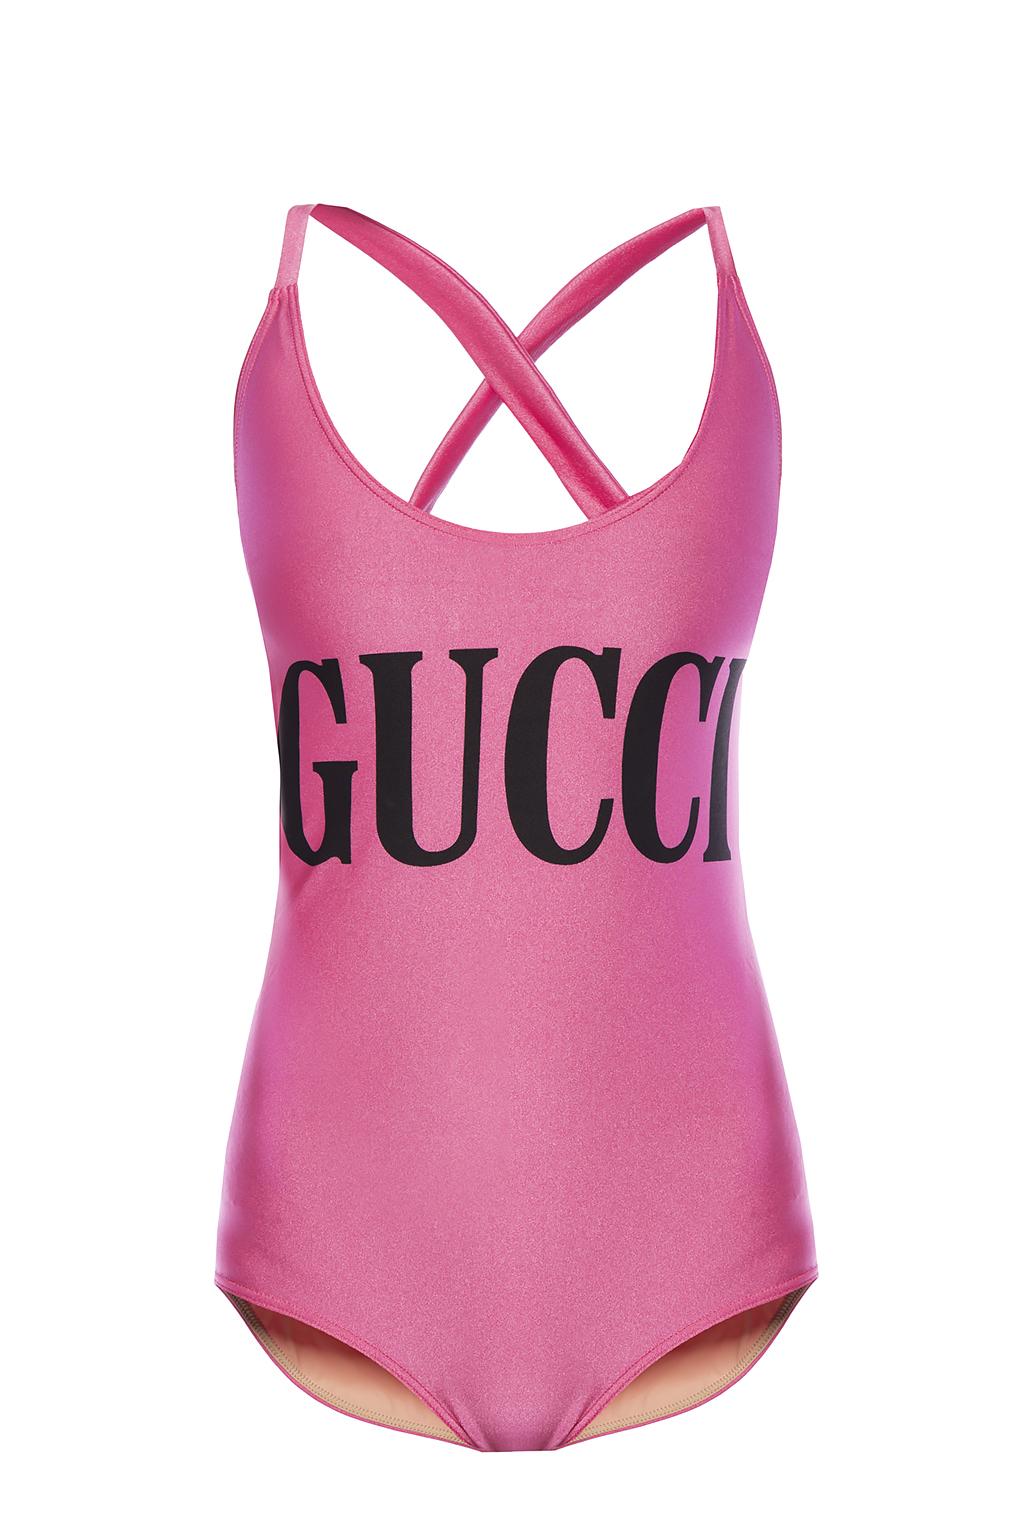 gucci swimsuit gucci swimsuit 2 piece gucci bathing suit pink 2 piece gucci  swim trunks gucci one-piece swimsuit gucci swimsuit xl